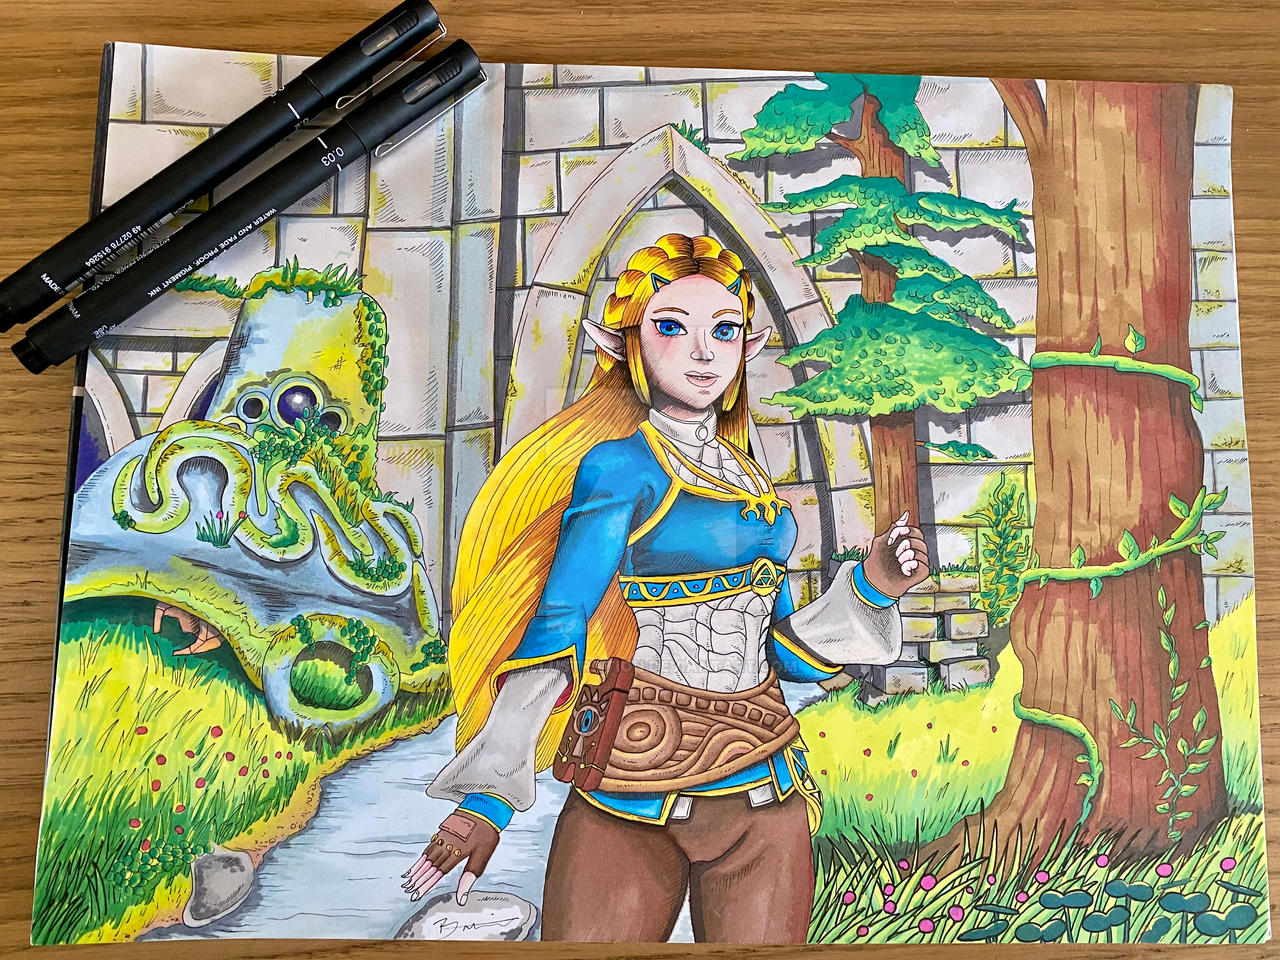 Zelda - Link To The Past by alxcarvalho on DeviantArt